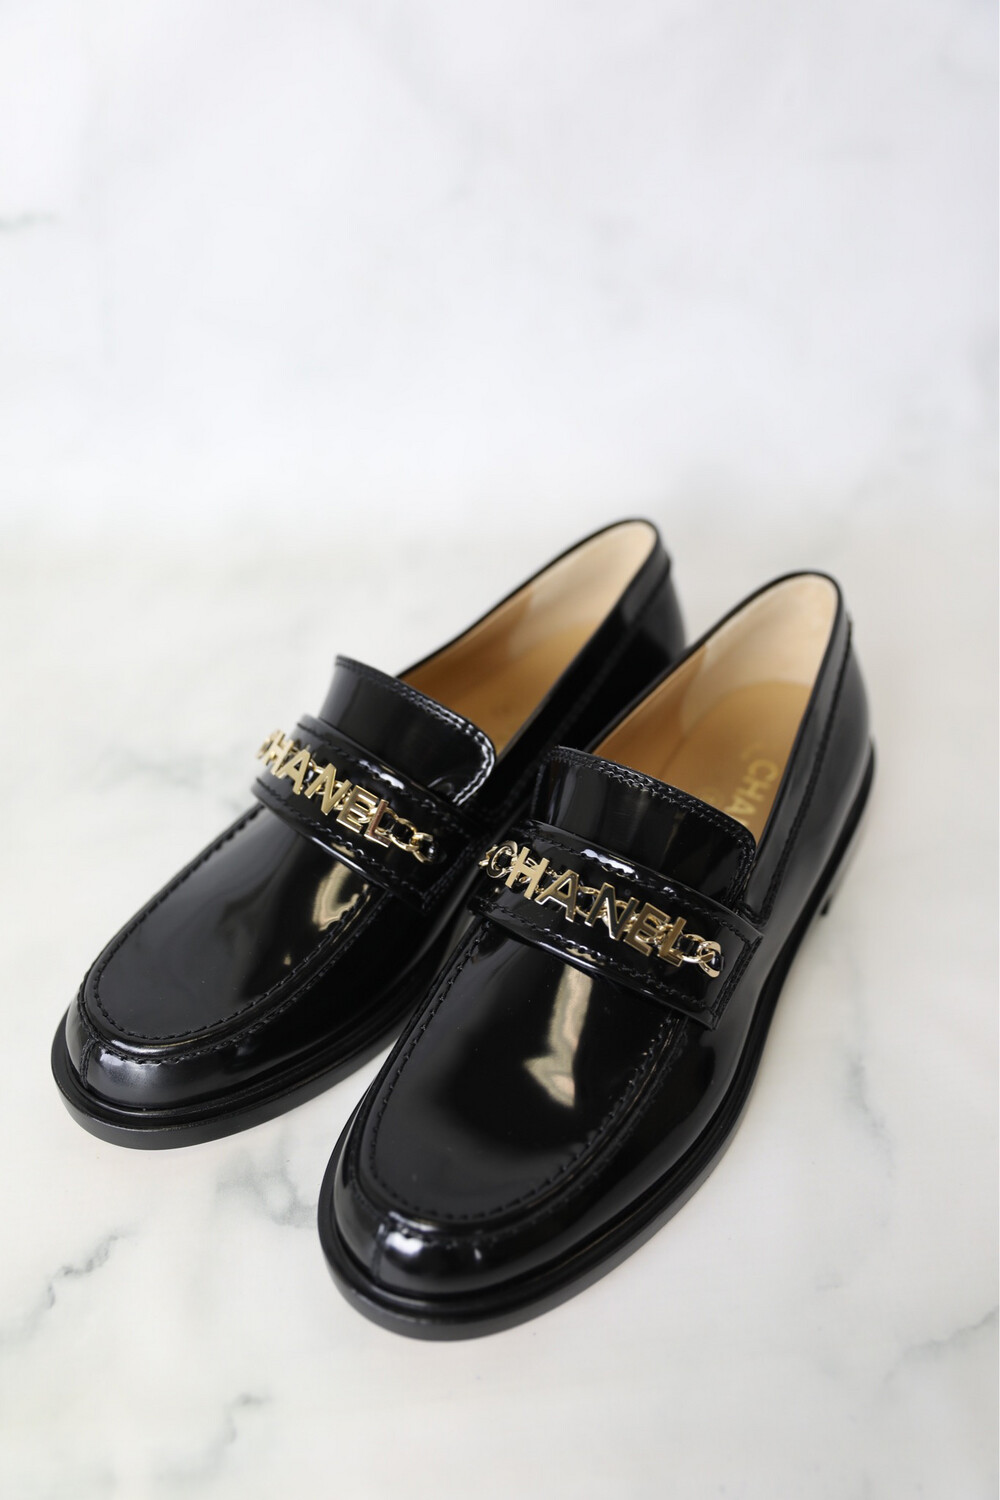 Chanel Shoes Loafers, Black Patent, Size 40, New in Box WA001 - Julia Rose  Boston | Shop